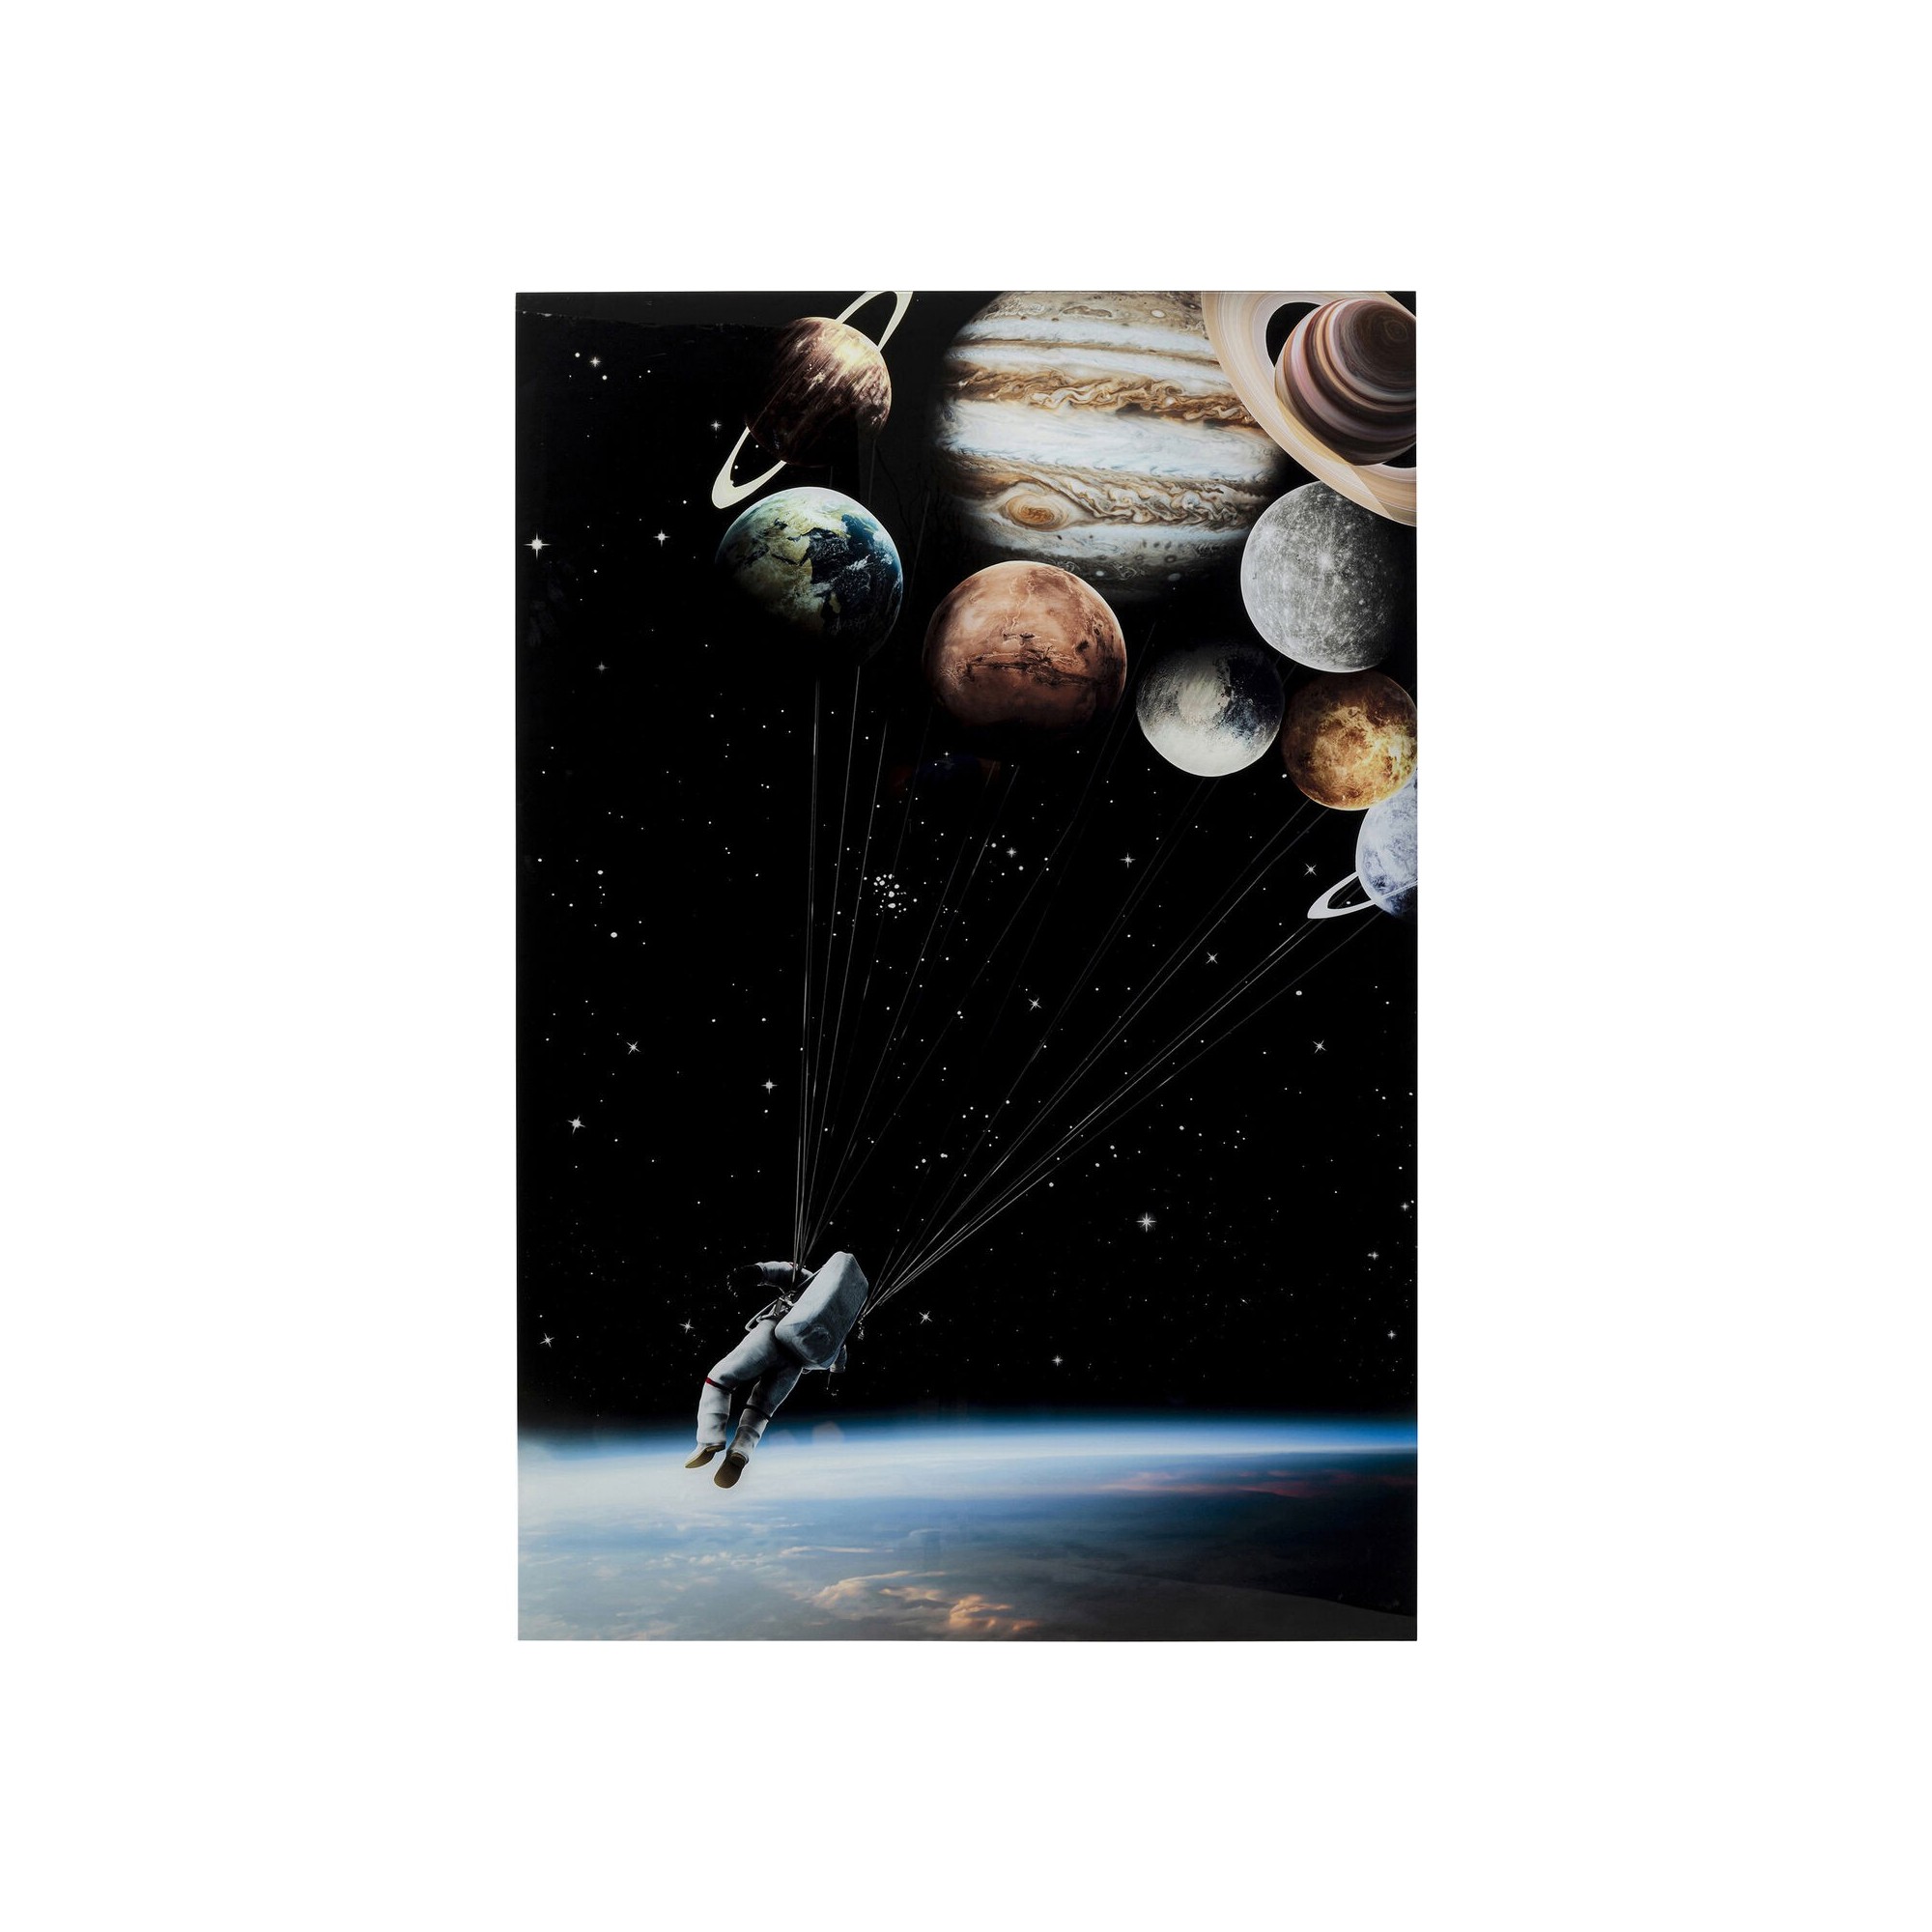 Tableau en verre Flying Astronaut 100x150cm